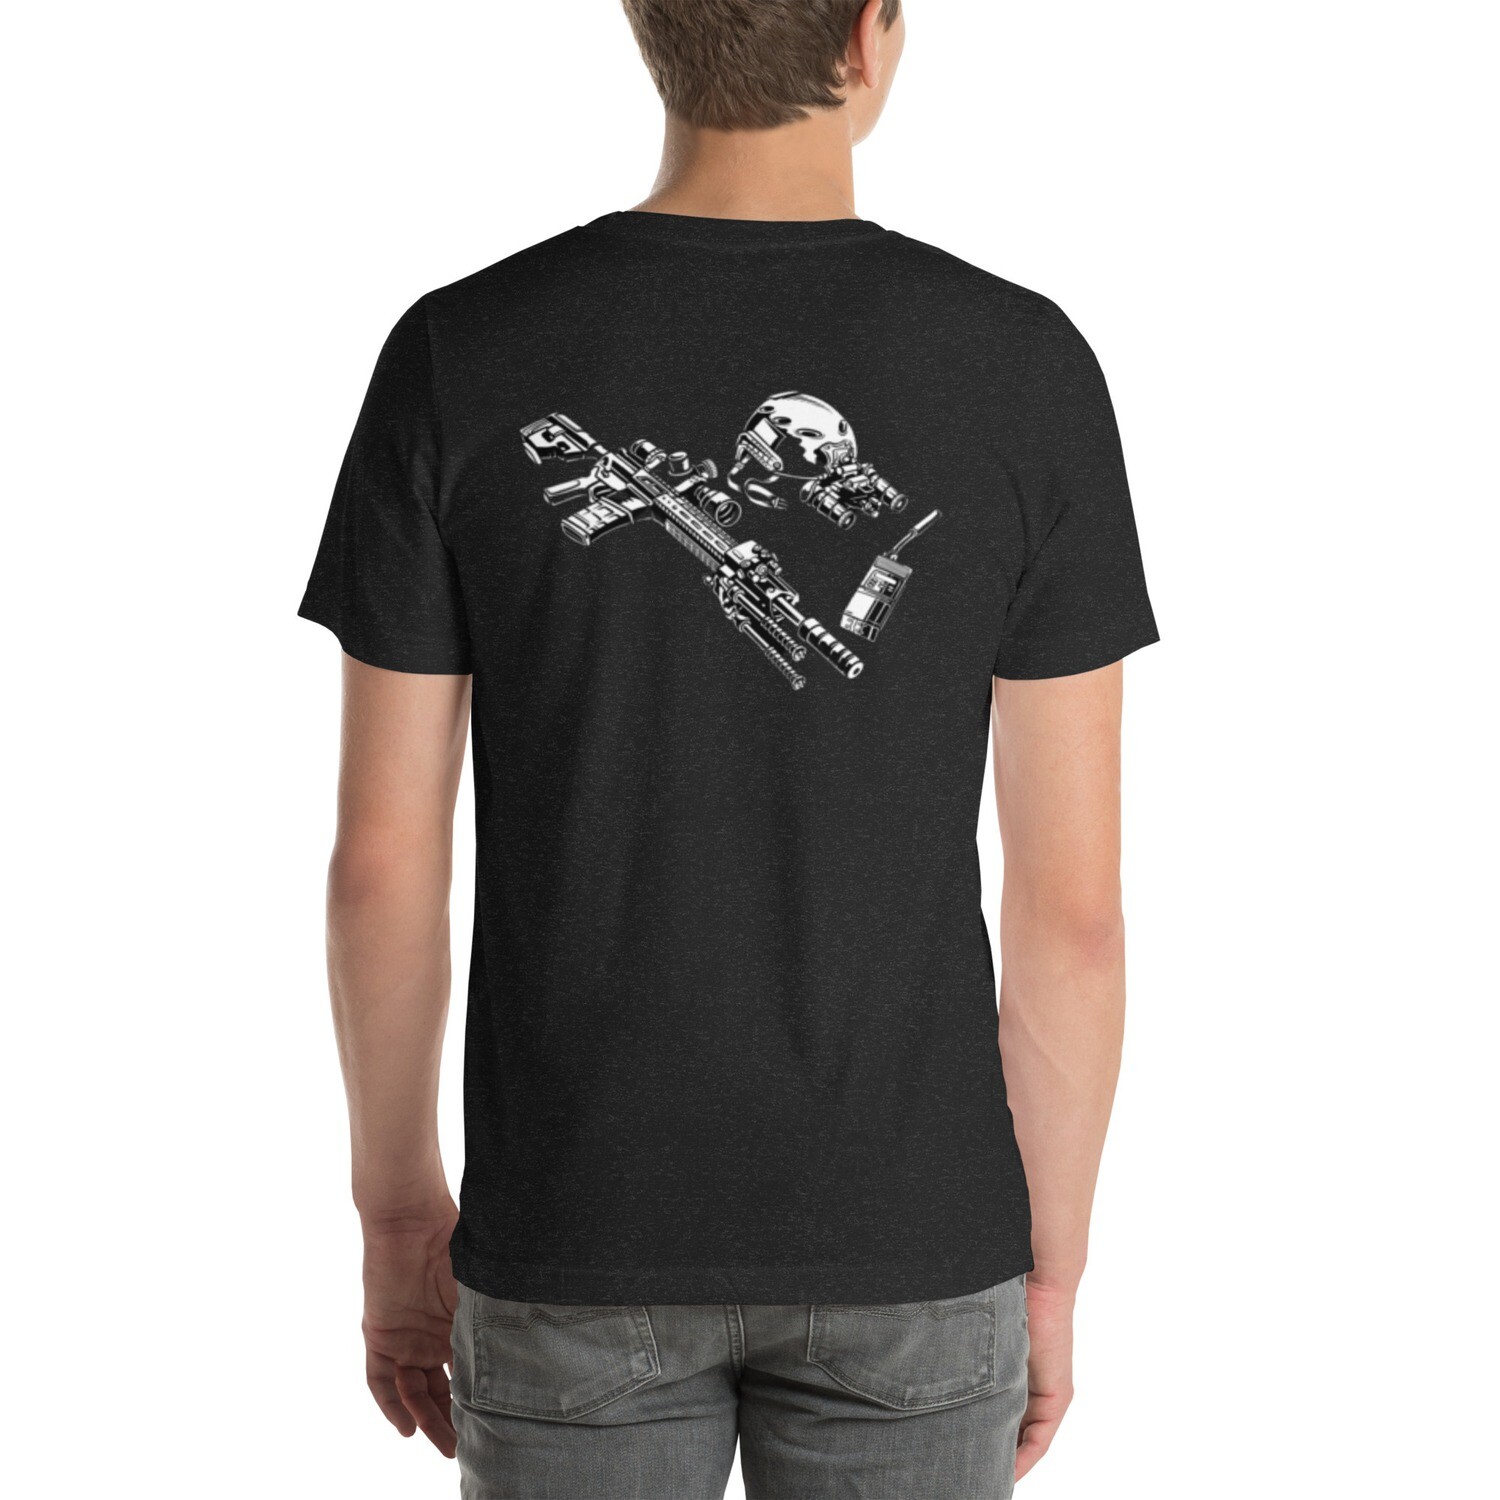 "Lightfighter" T-shirt